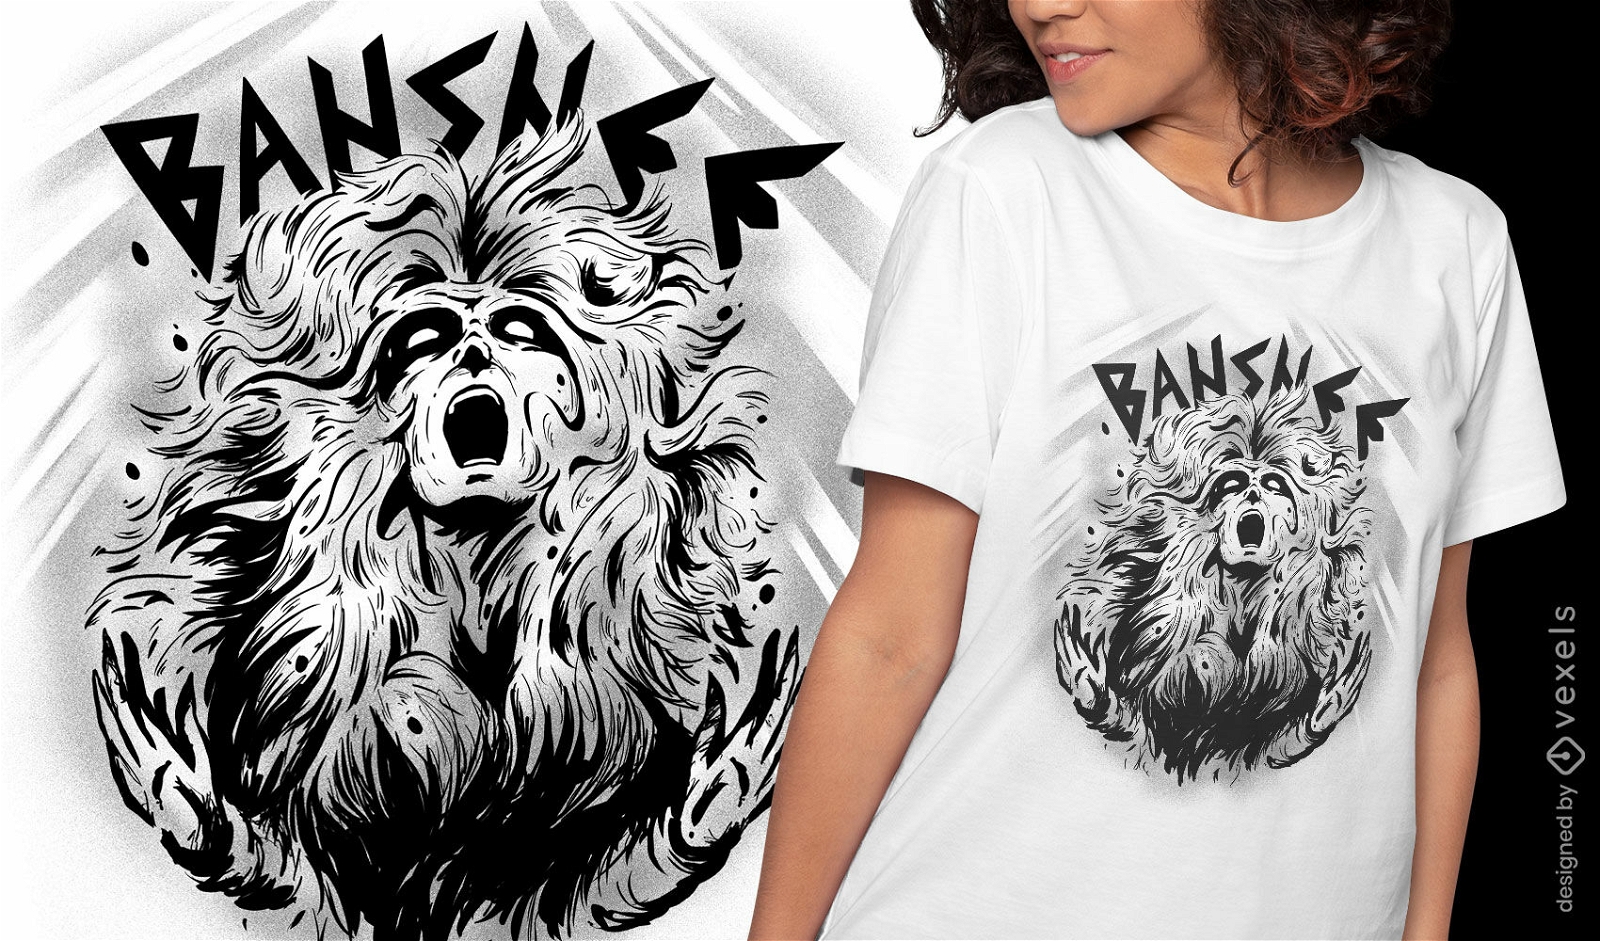 Banshee celtic creature t-shirt design